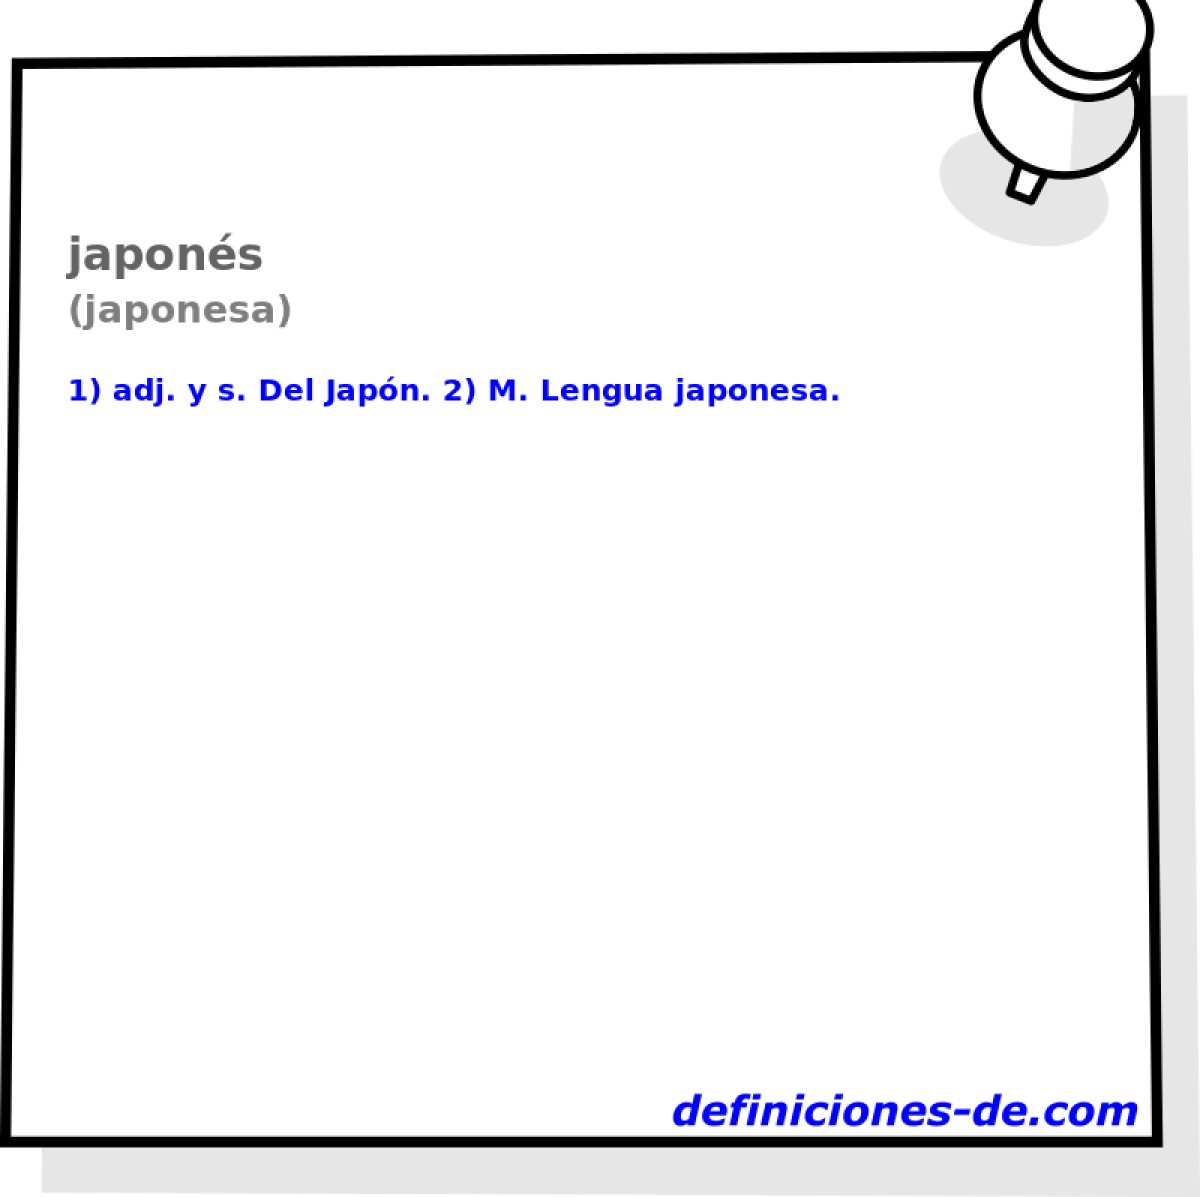 japons (japonesa)